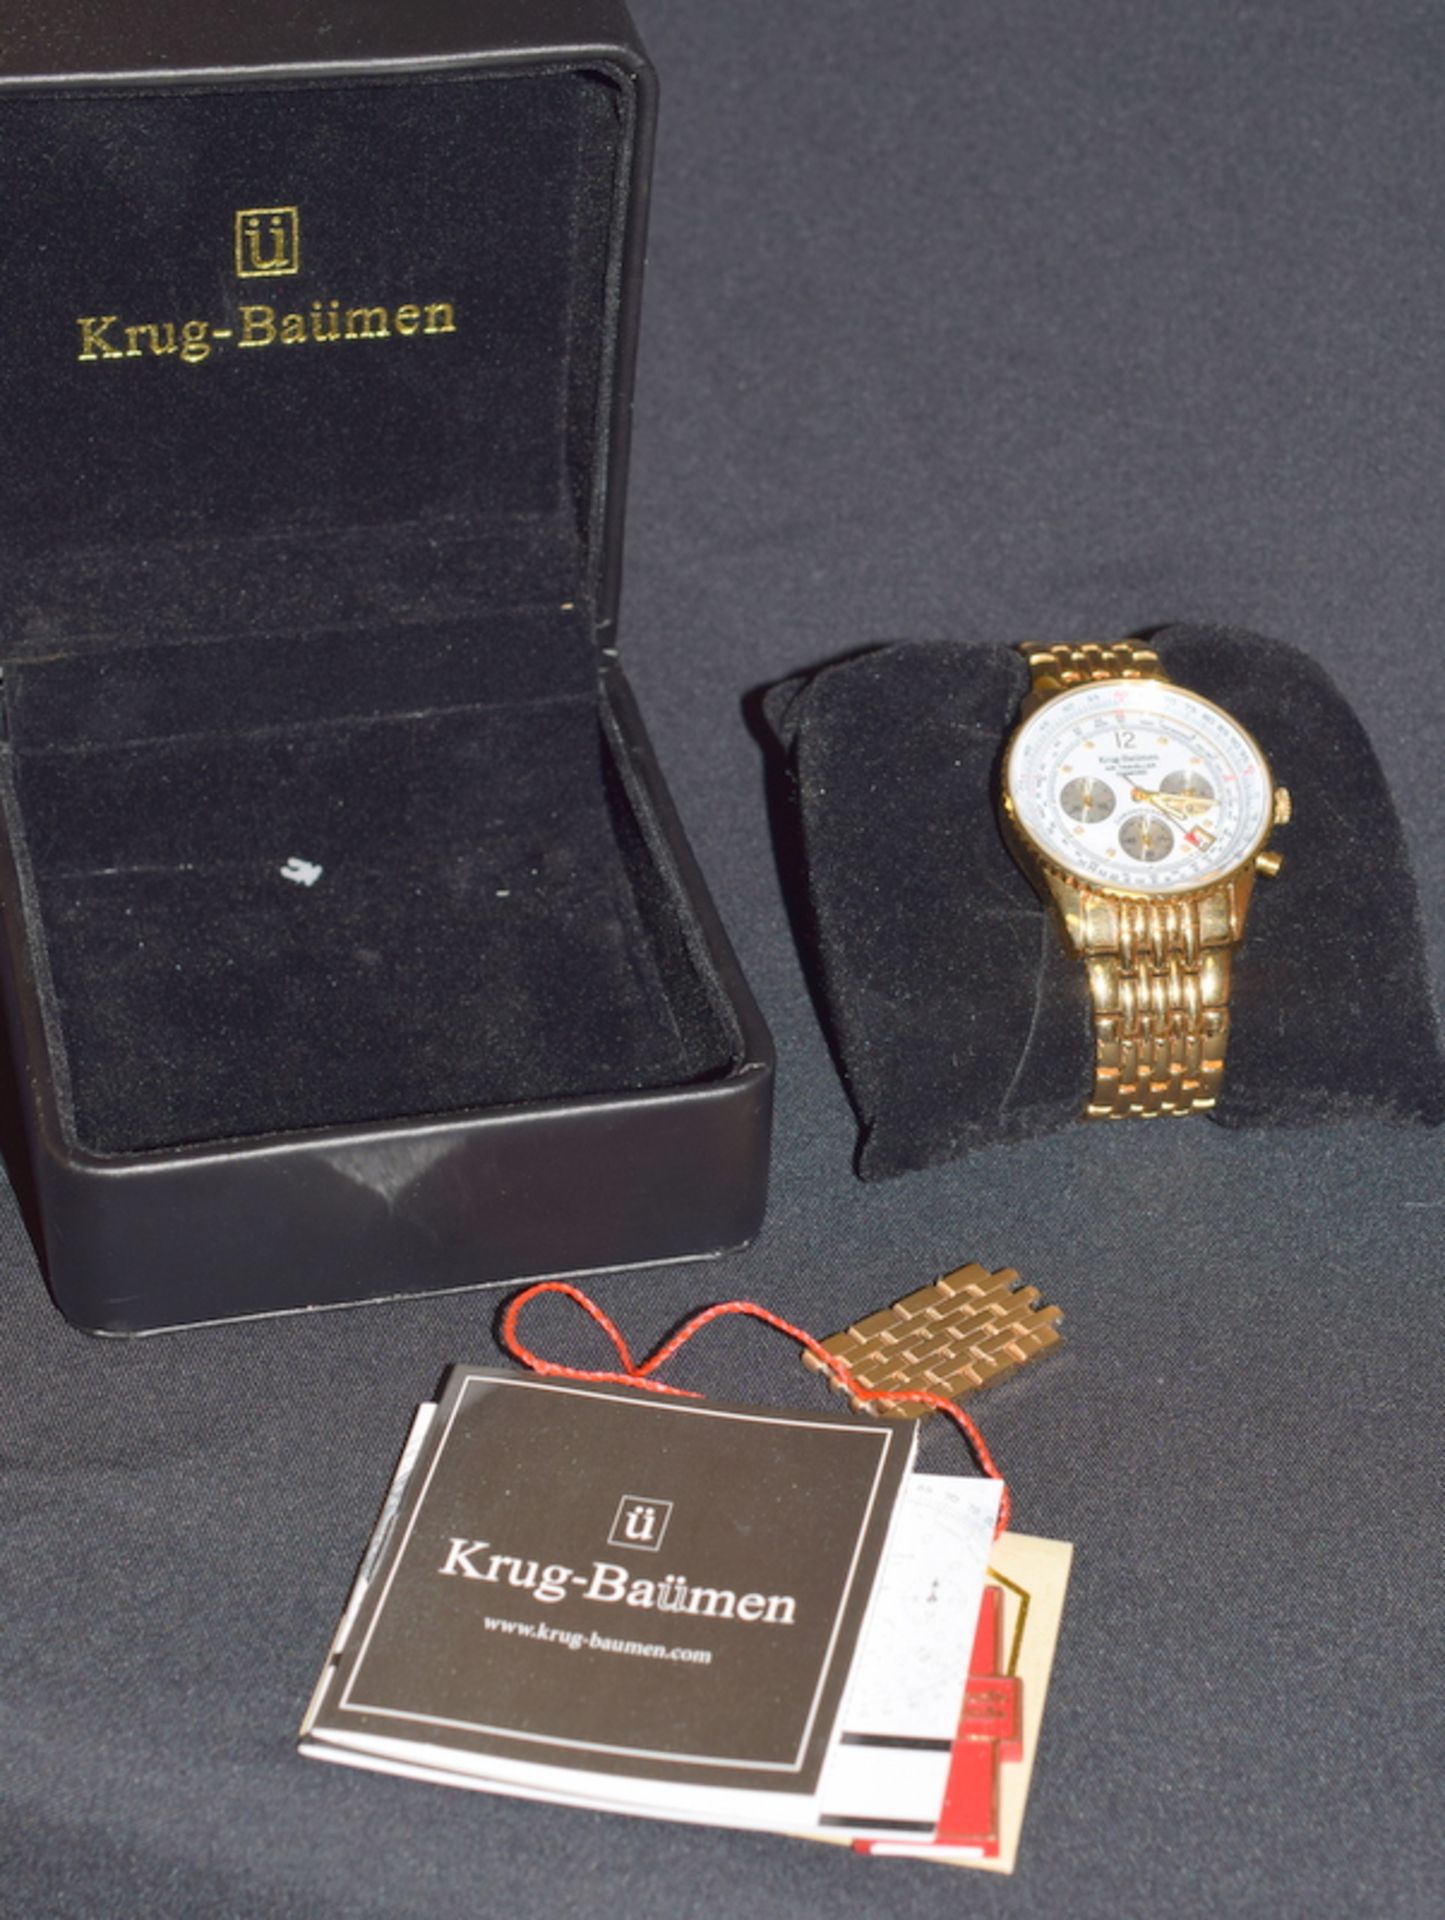 Krug Bauman Air Traveller Diamond Chronograph - Image 4 of 6